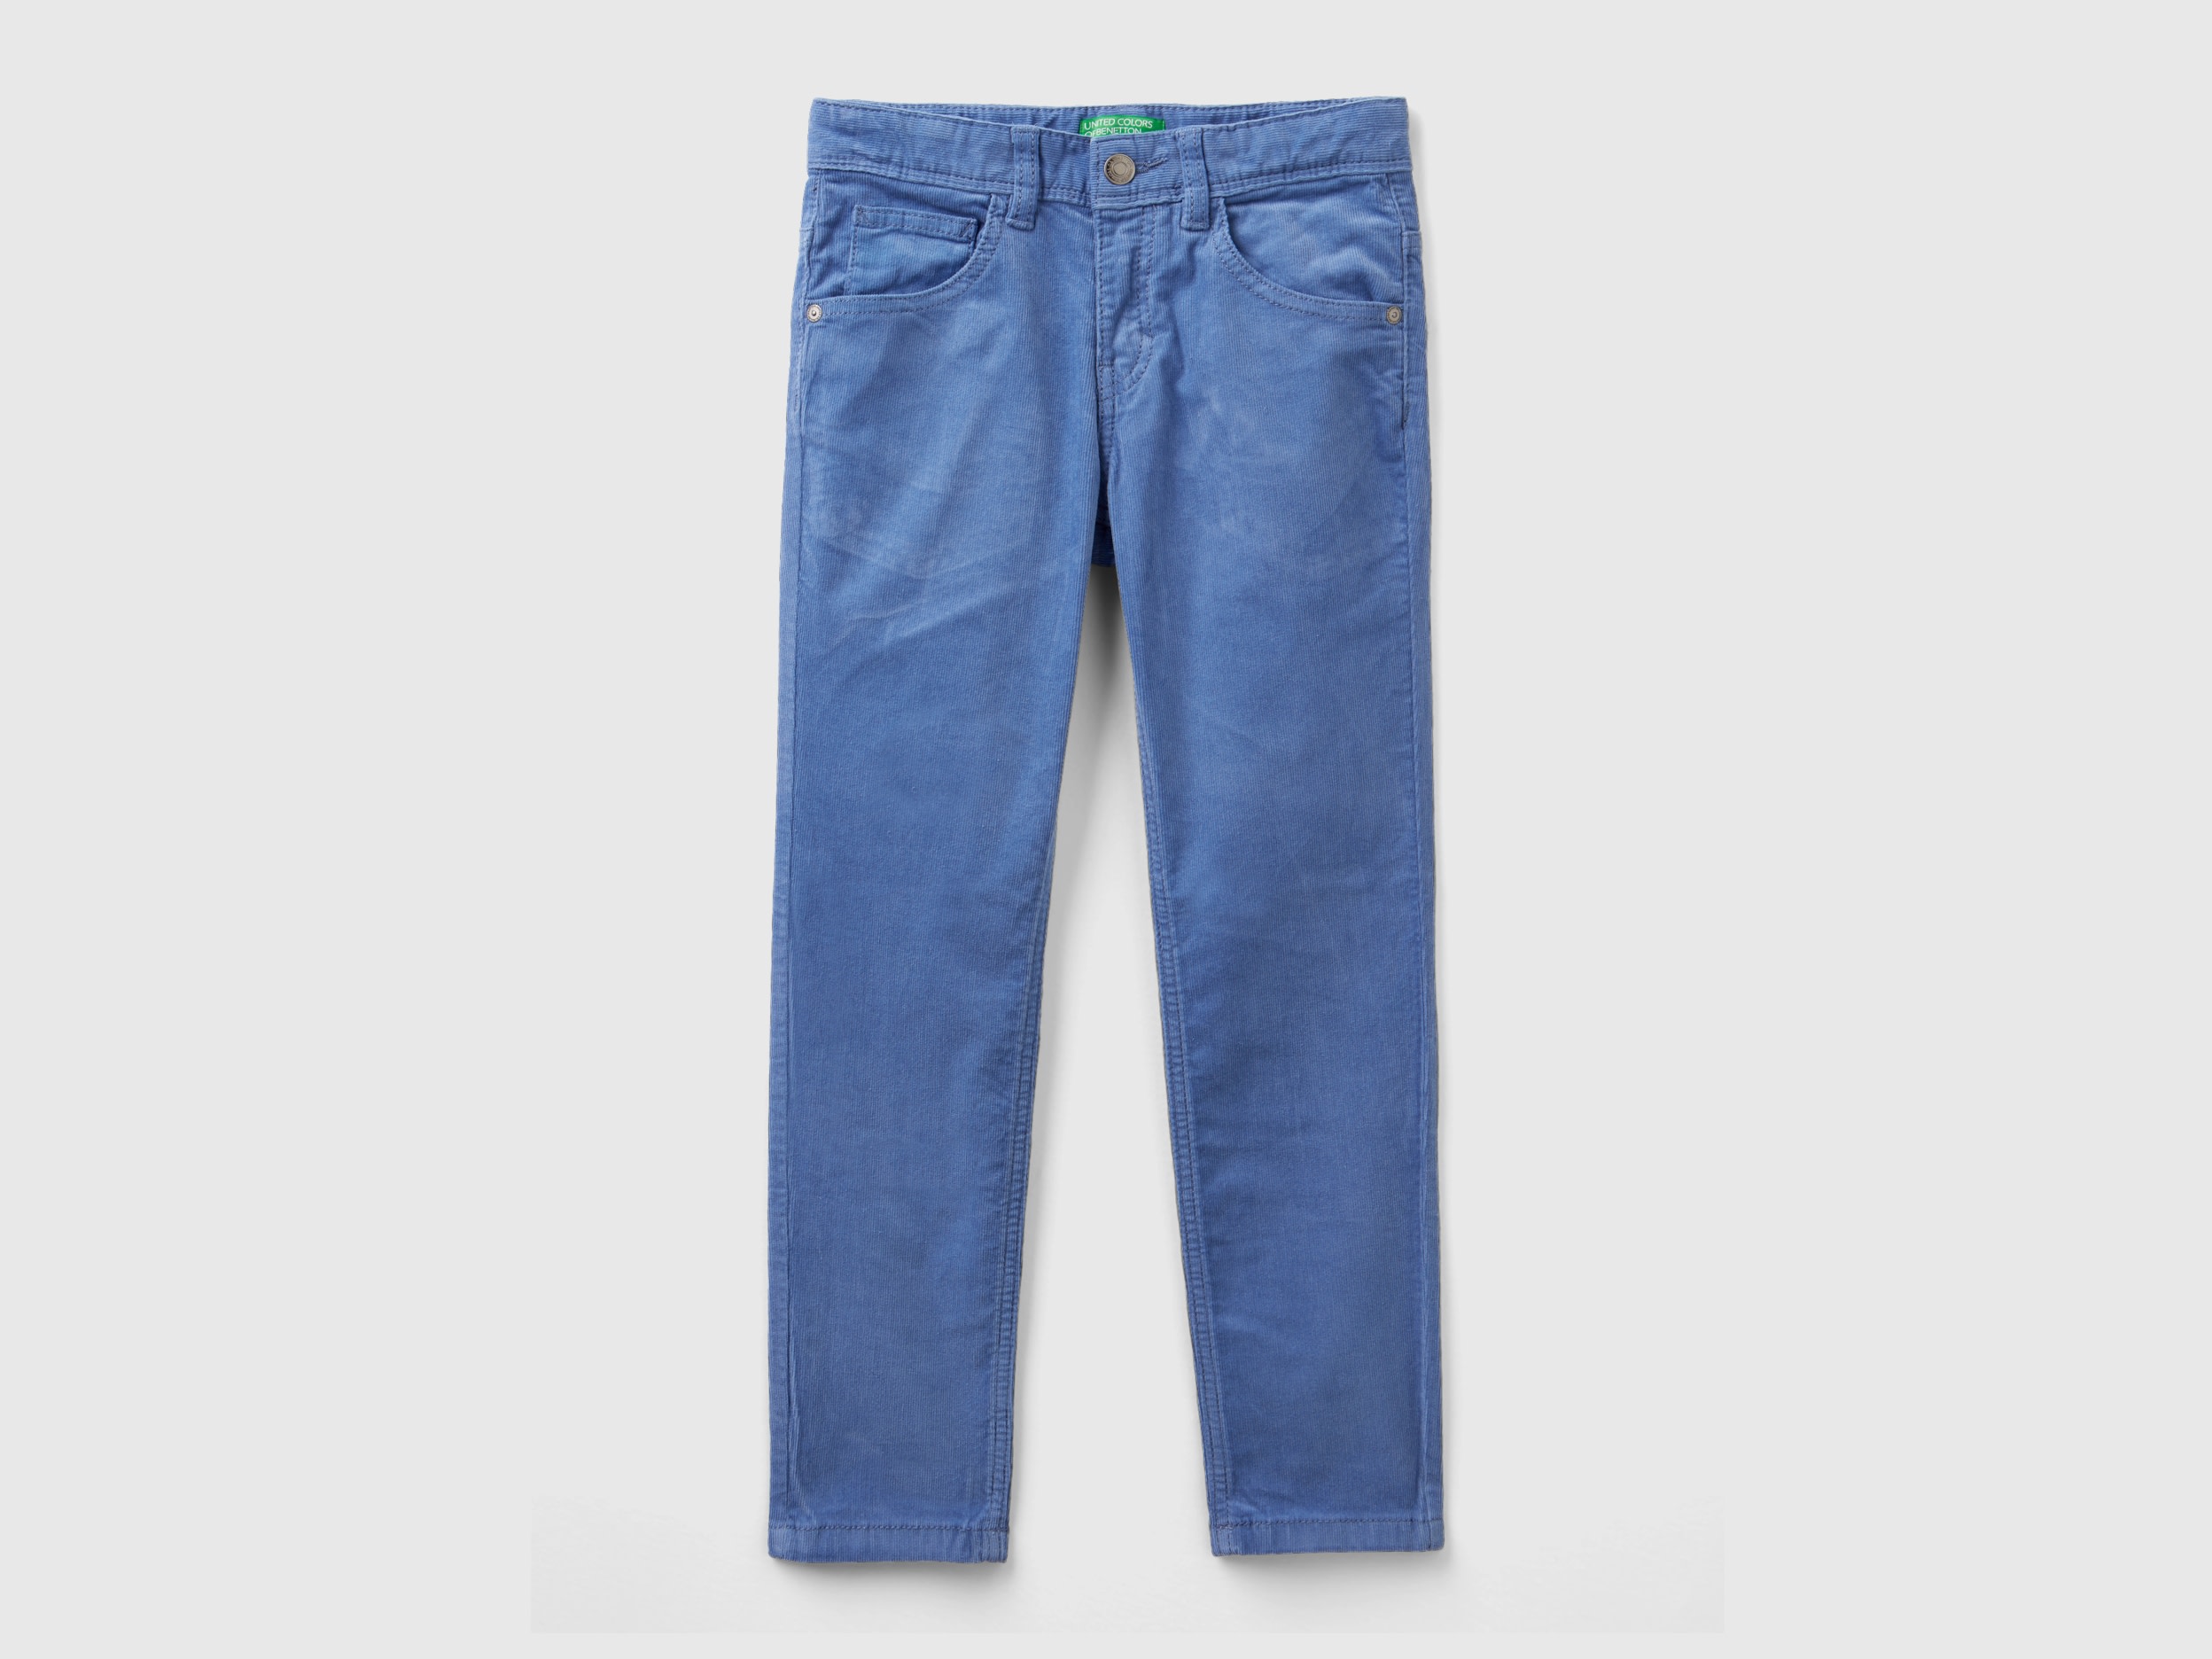 Benetton, Slim Fit Stretch Corduroy Trousers, size 2XL, Light Blue, Kids